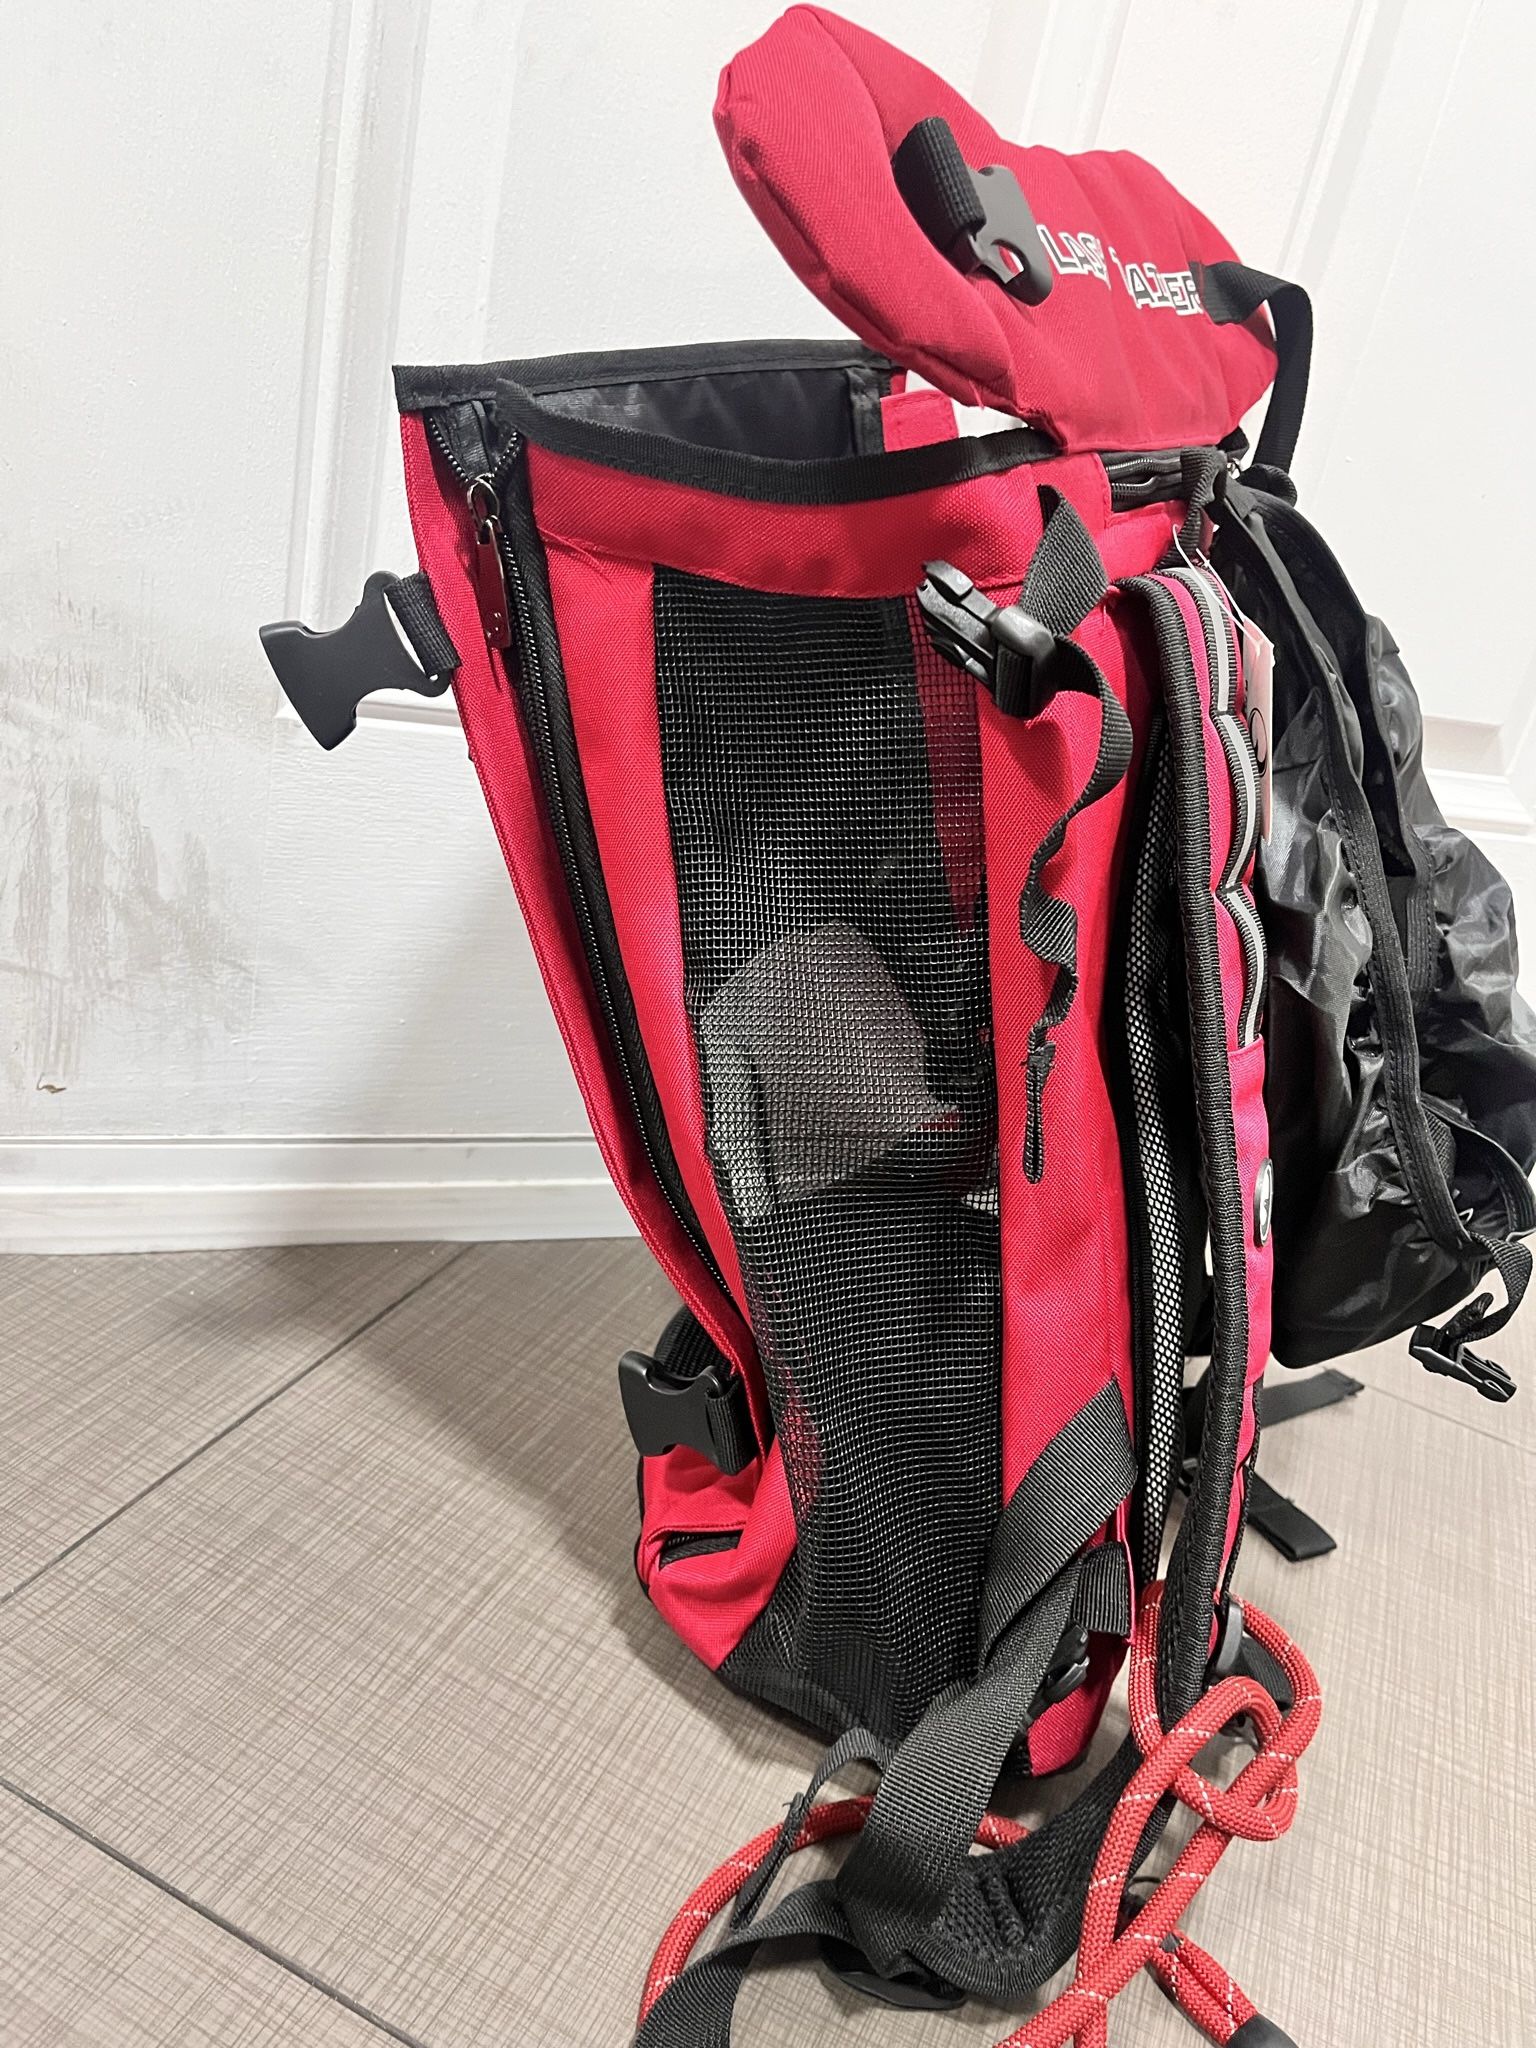 Travel Bag For Dog Hiking Backpack NEW